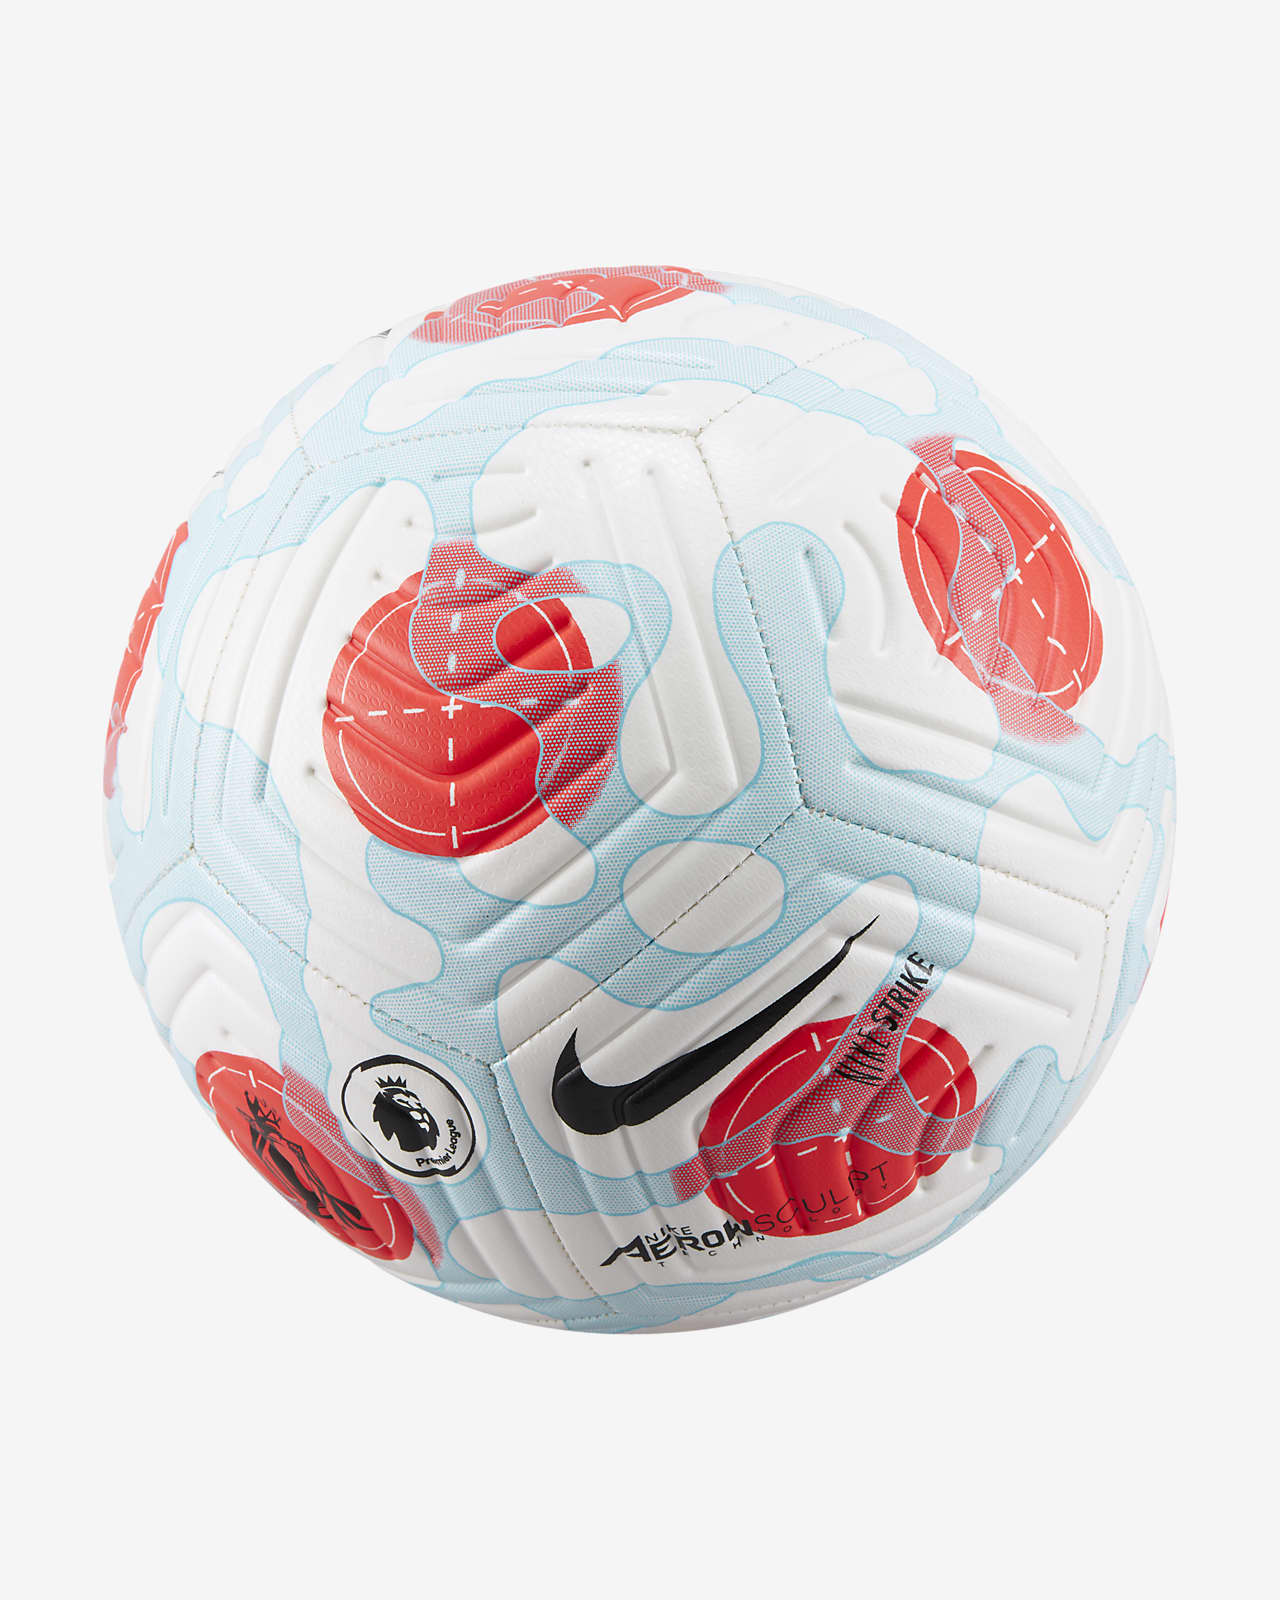 League Third Soccer Ball.